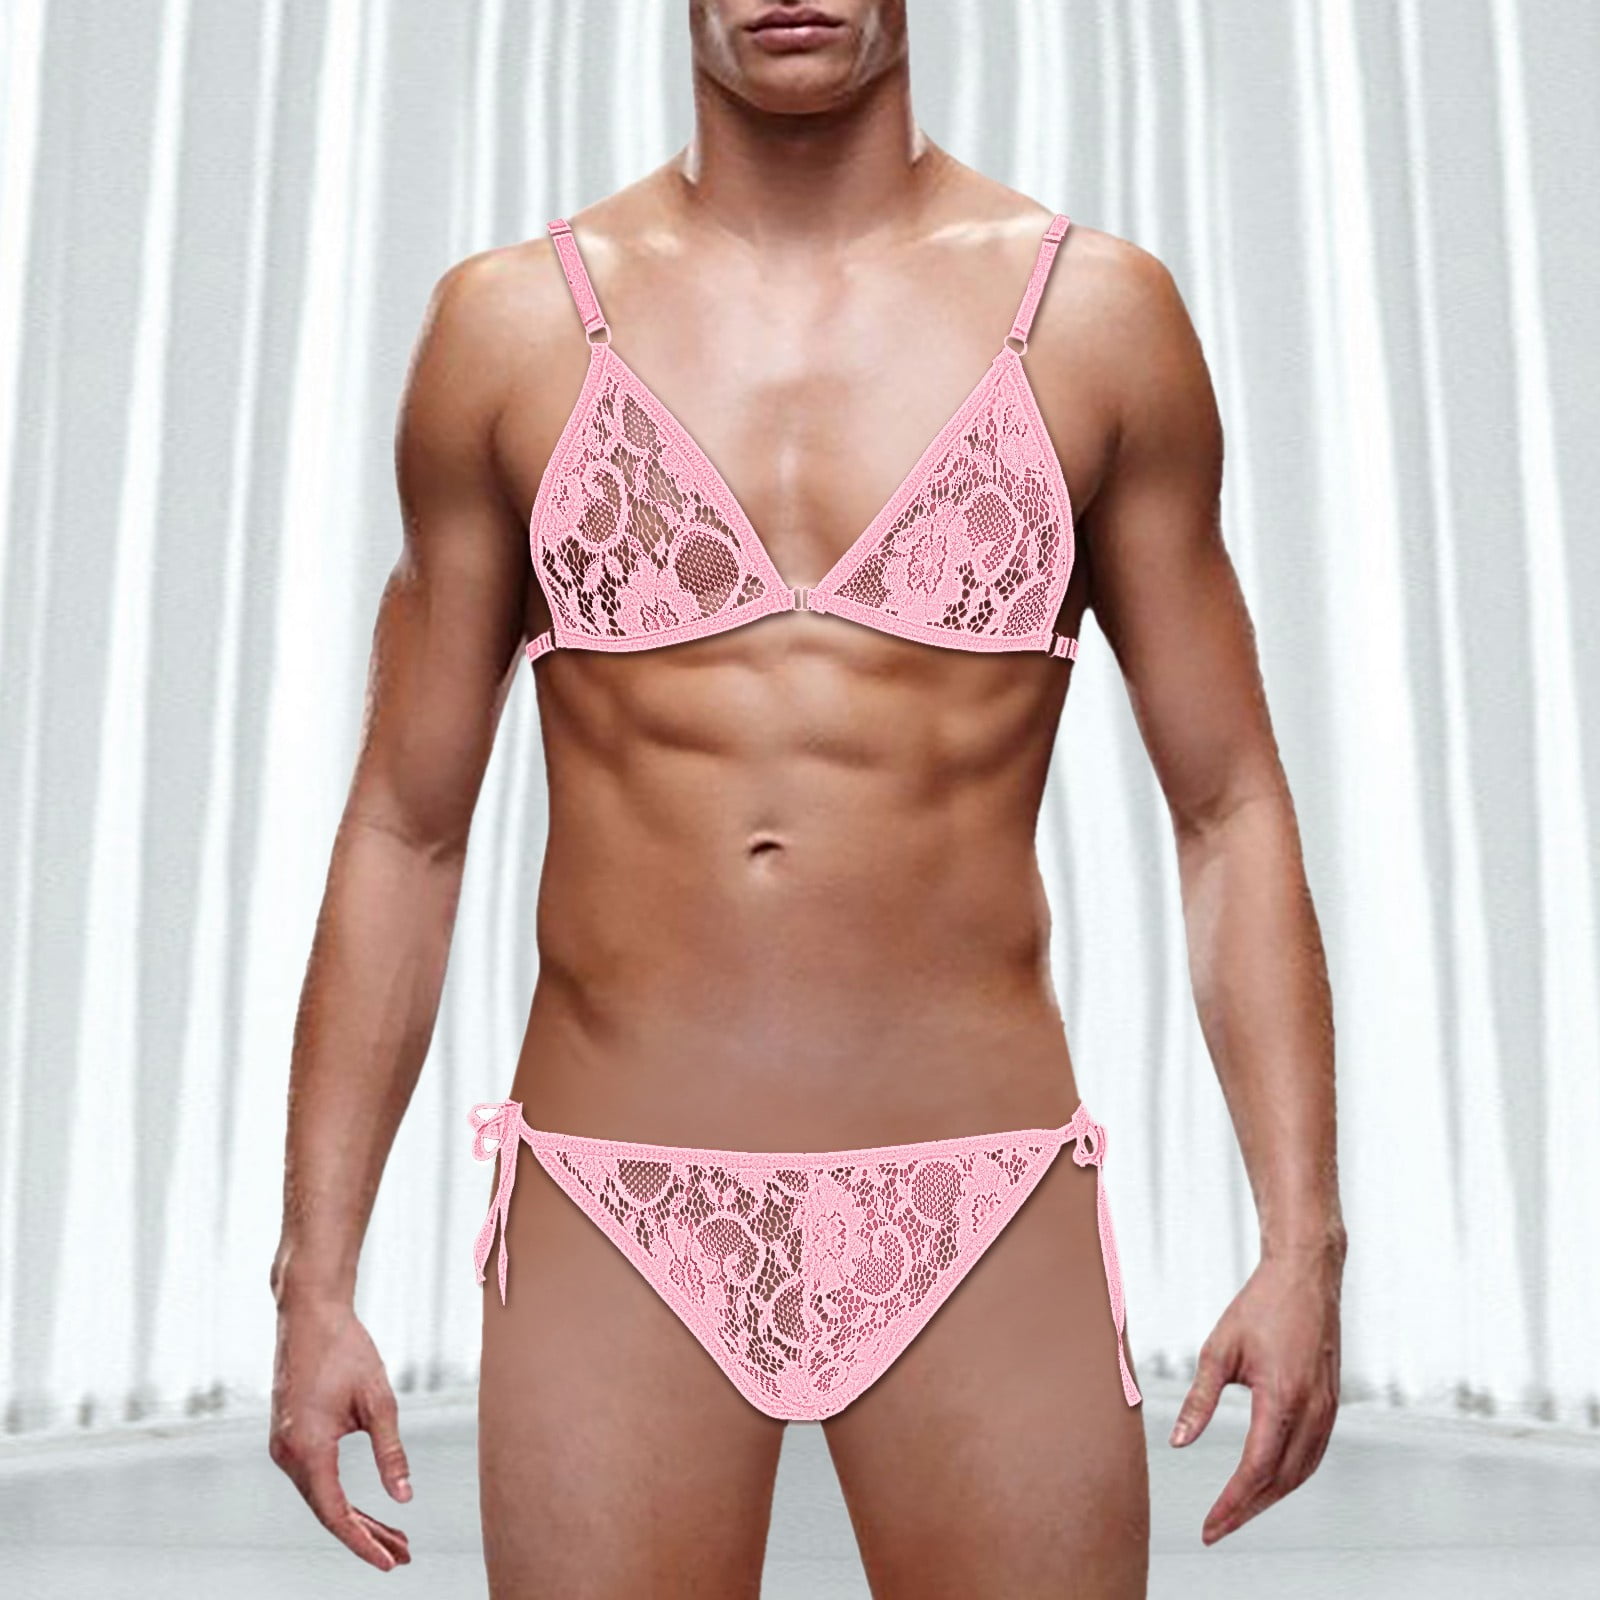 PMUYBHF Men'S Lace Bikini Lace Up Set See Through Adjustable